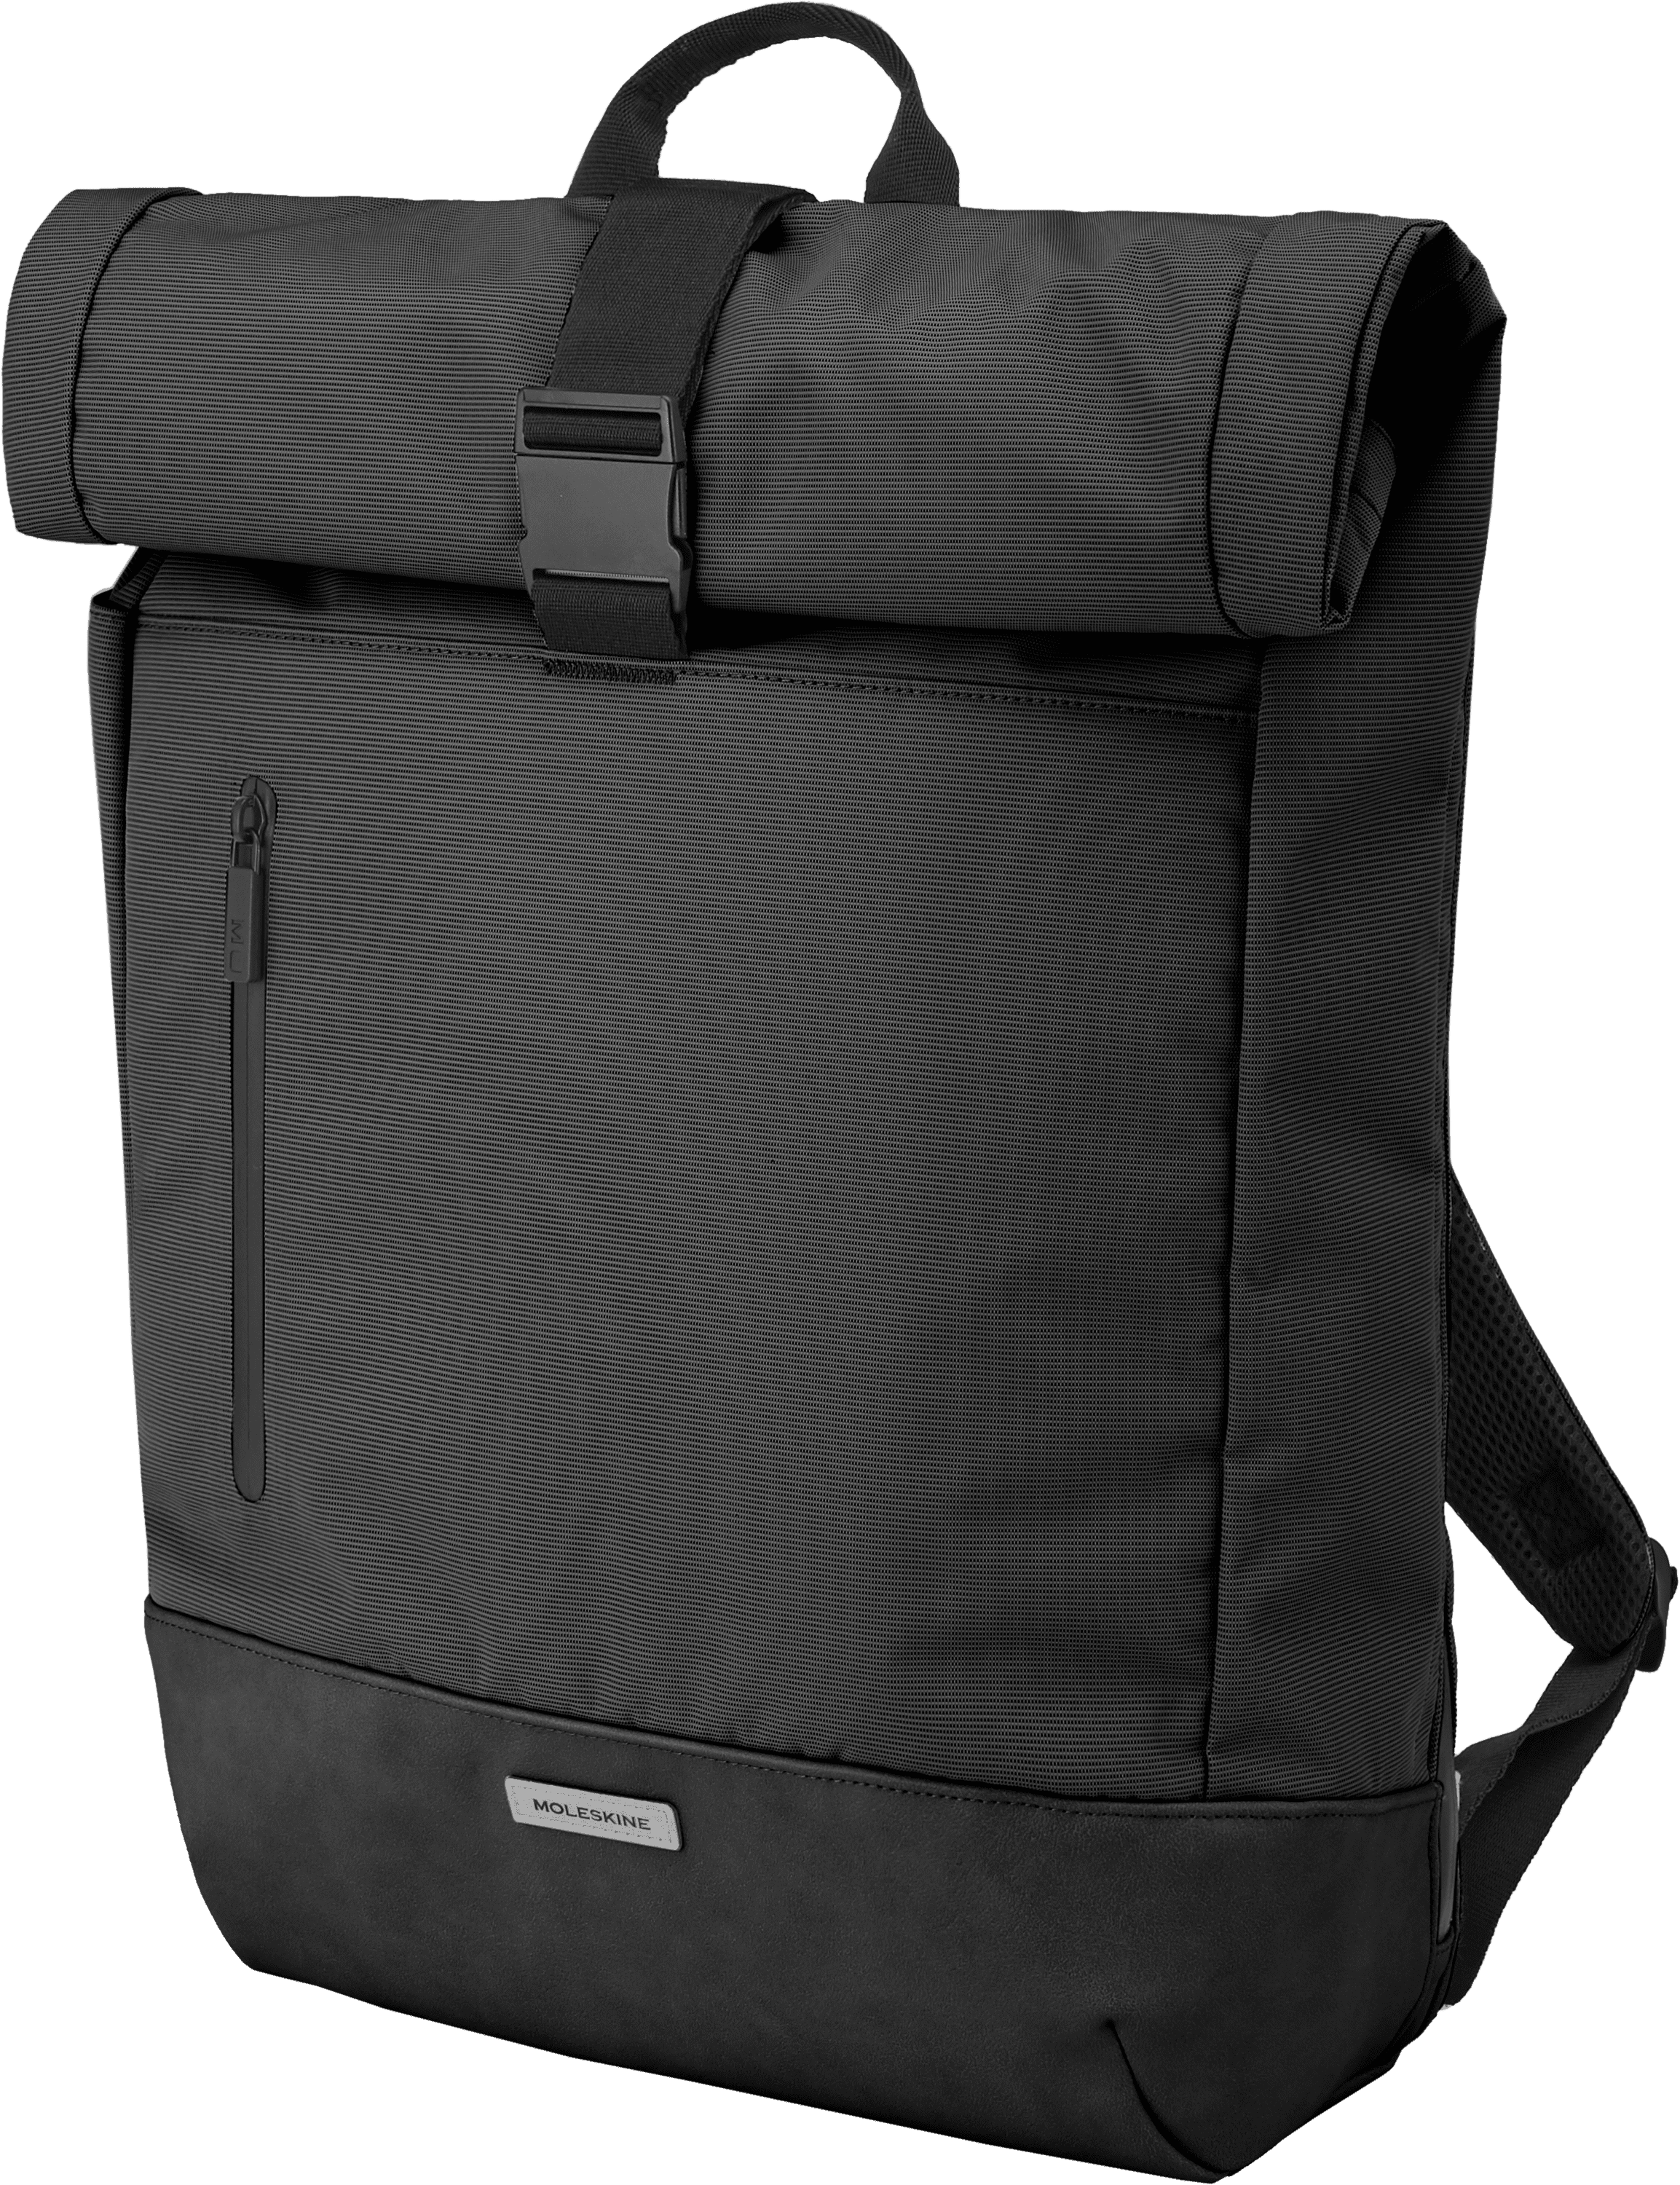 Moleskine Leather Backpack Classic Collection Black | Moleskine